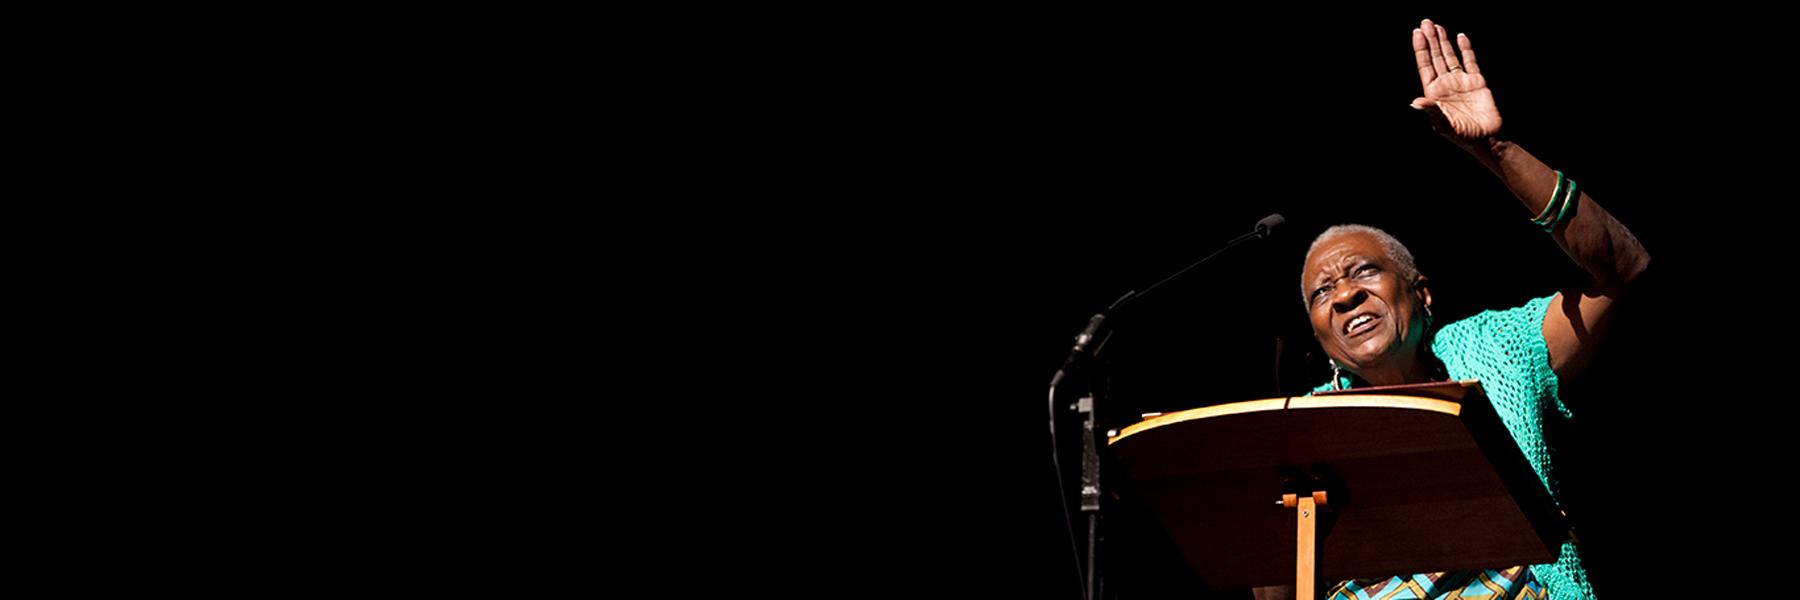 Dr. Francine Childs, on stage in 2013